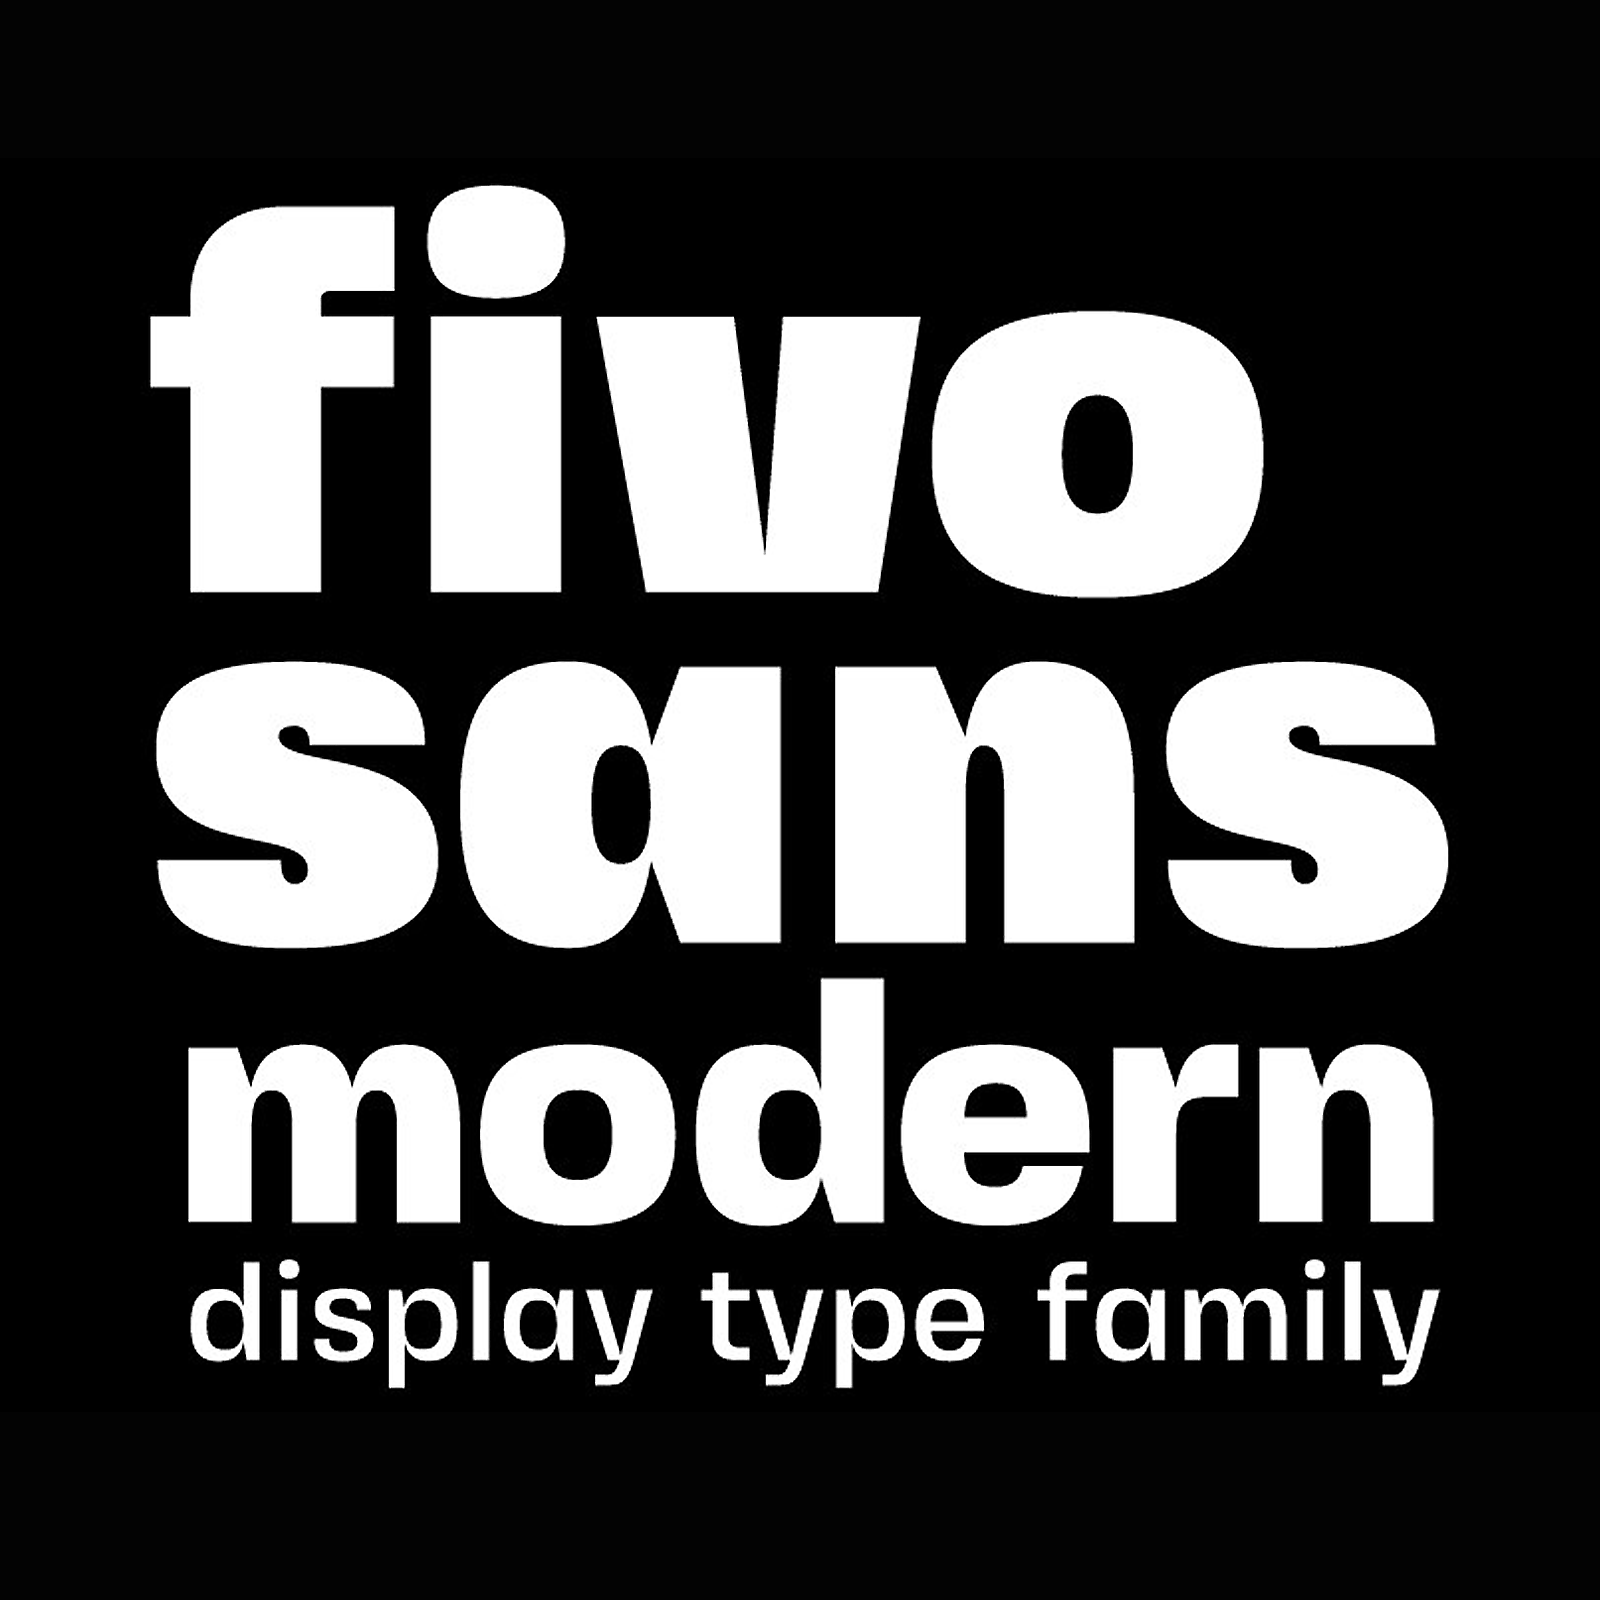 Font Fivo Sans Modern